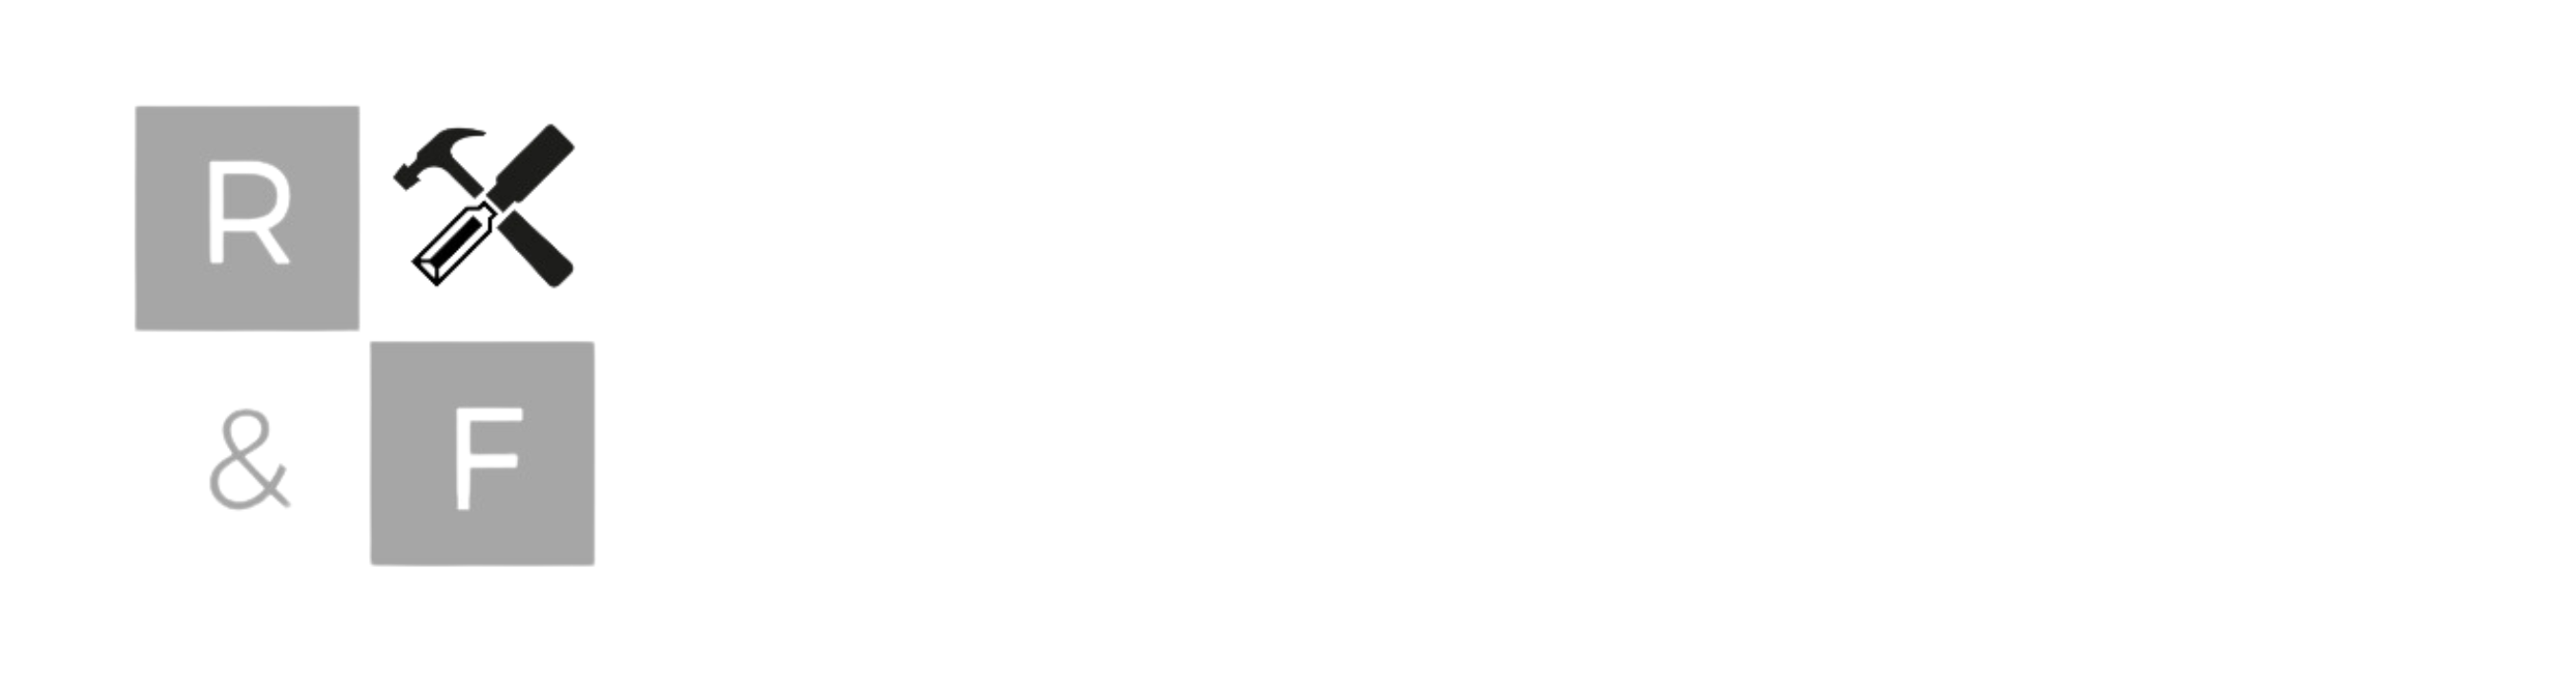 Rosén & Frick bygg